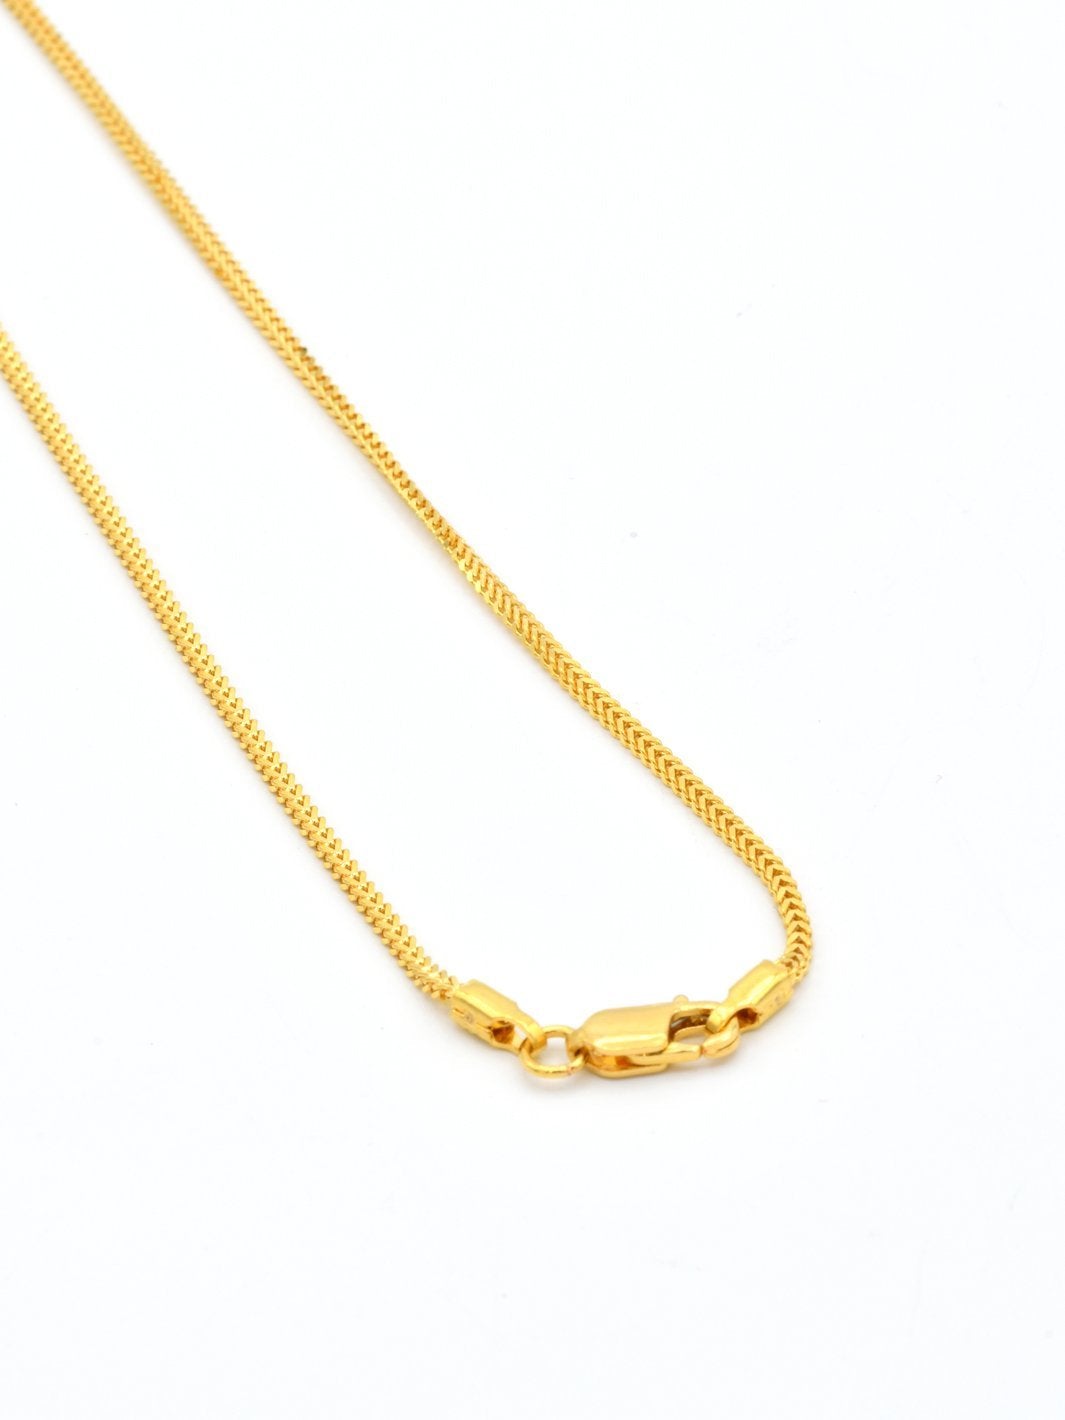 22ct Gold Fox Tail Chain - 35 cm - Roop Darshan